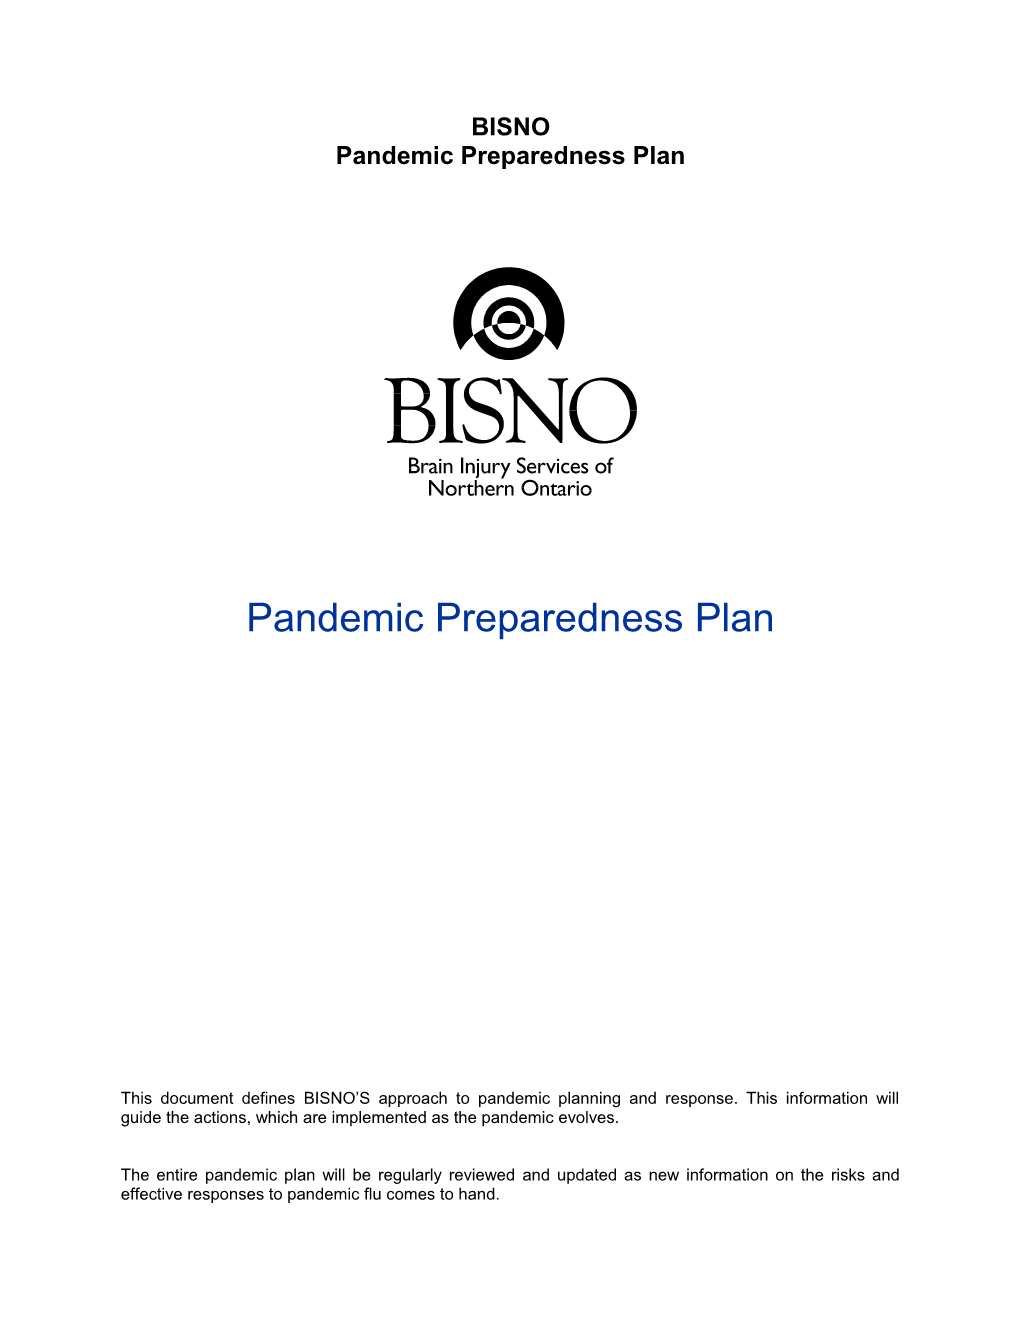 BISNO Pandemic Preparedness Plan 2007